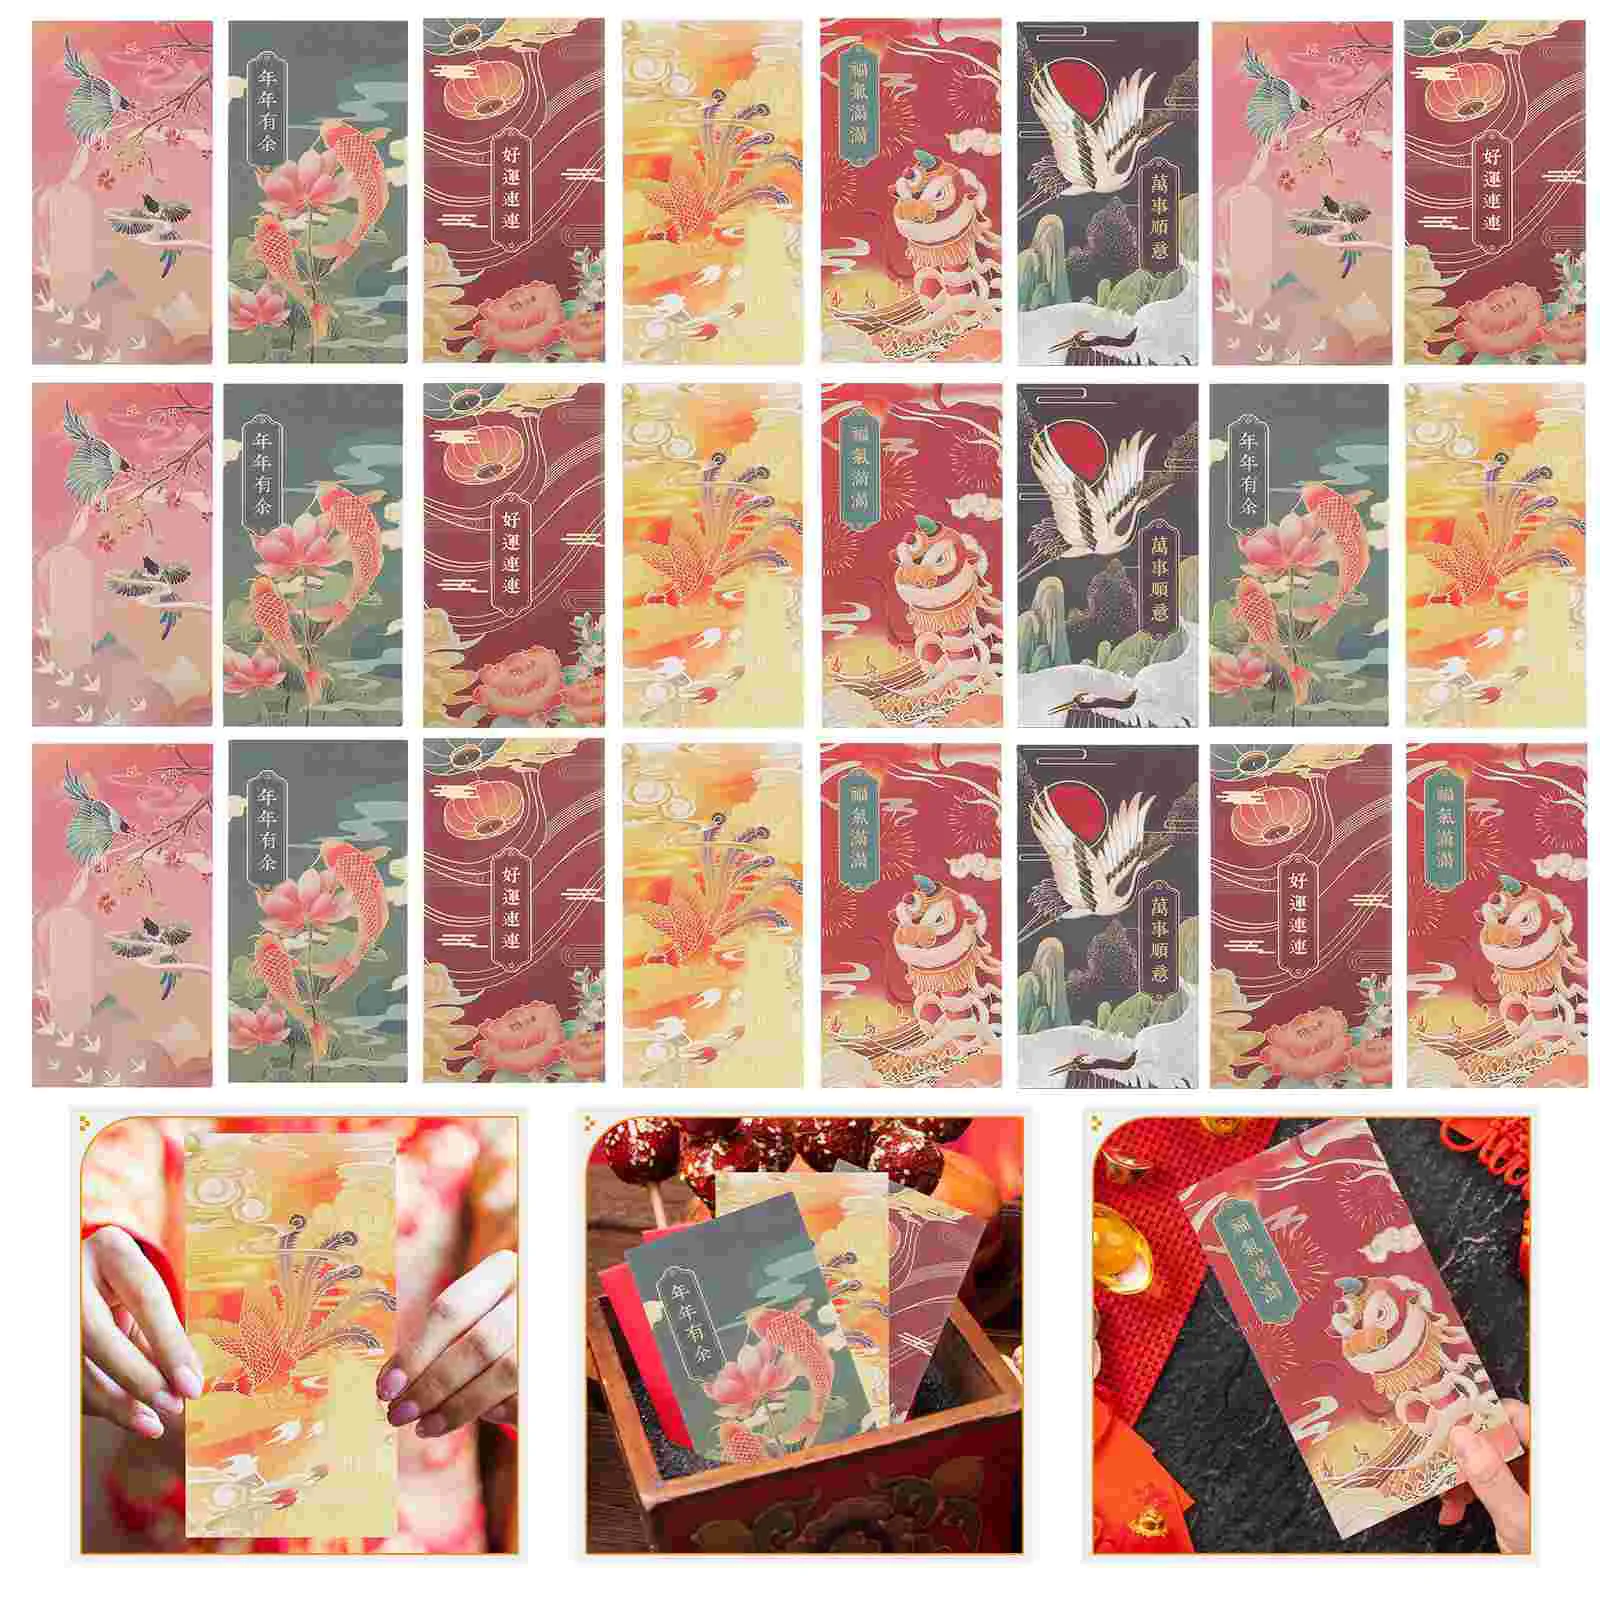 

24 Pcs Spring Festival Red Envelope The Gift Money Storage Pouches Festive Envelopes Paper New Year Auspicious Kids